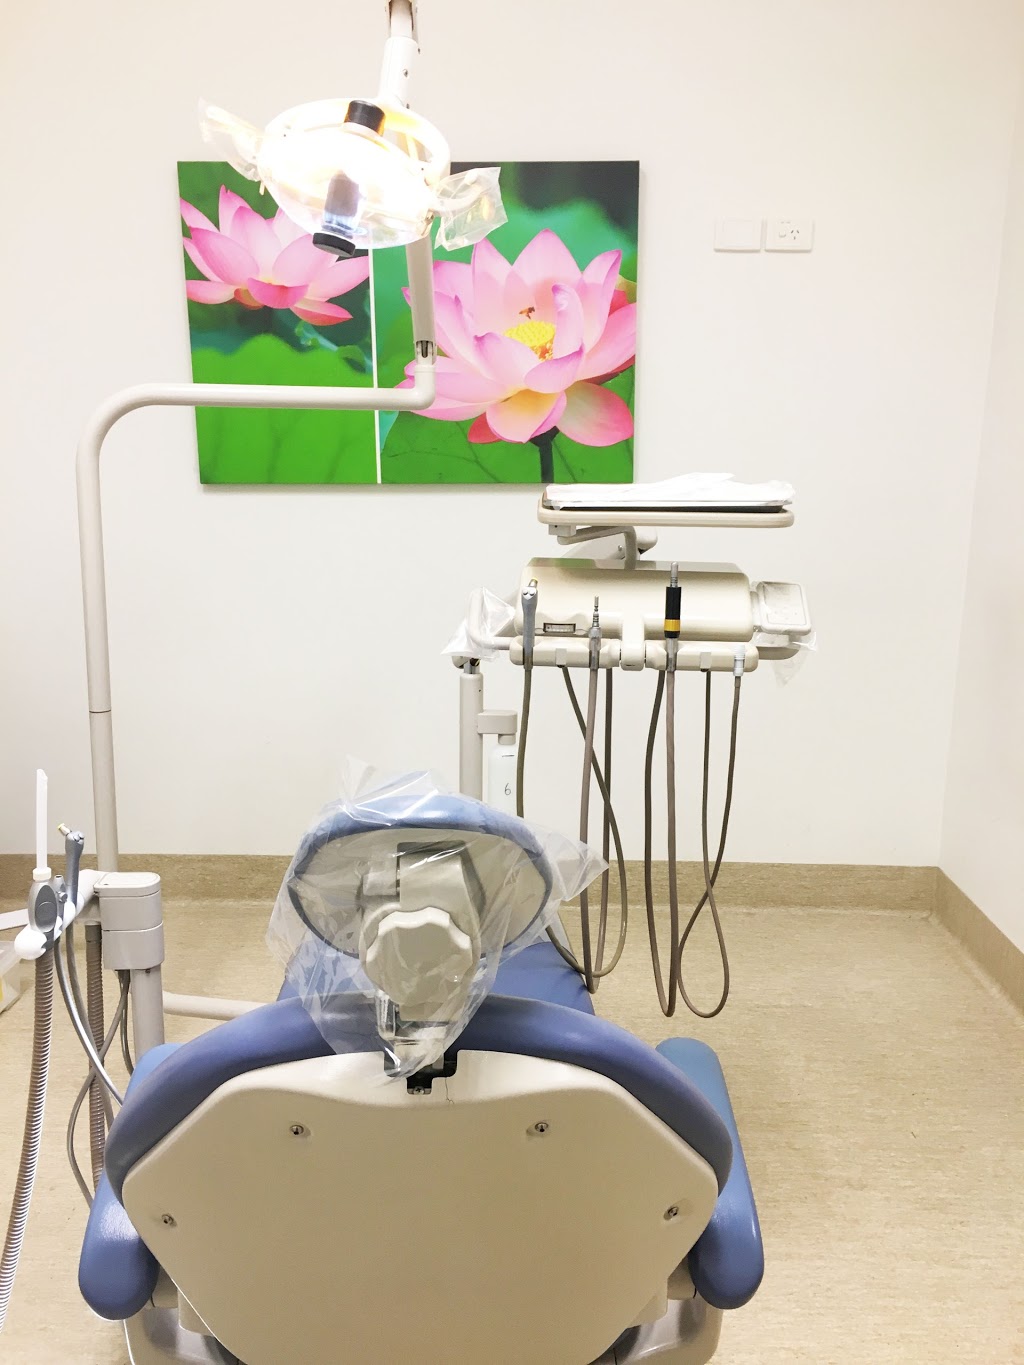 Nib Dental Care Centre, Newcastle | dentist | 366 Hunter St, Newcastle NSW 2300, Australia | 1300345300 OR +61 1300 345 300